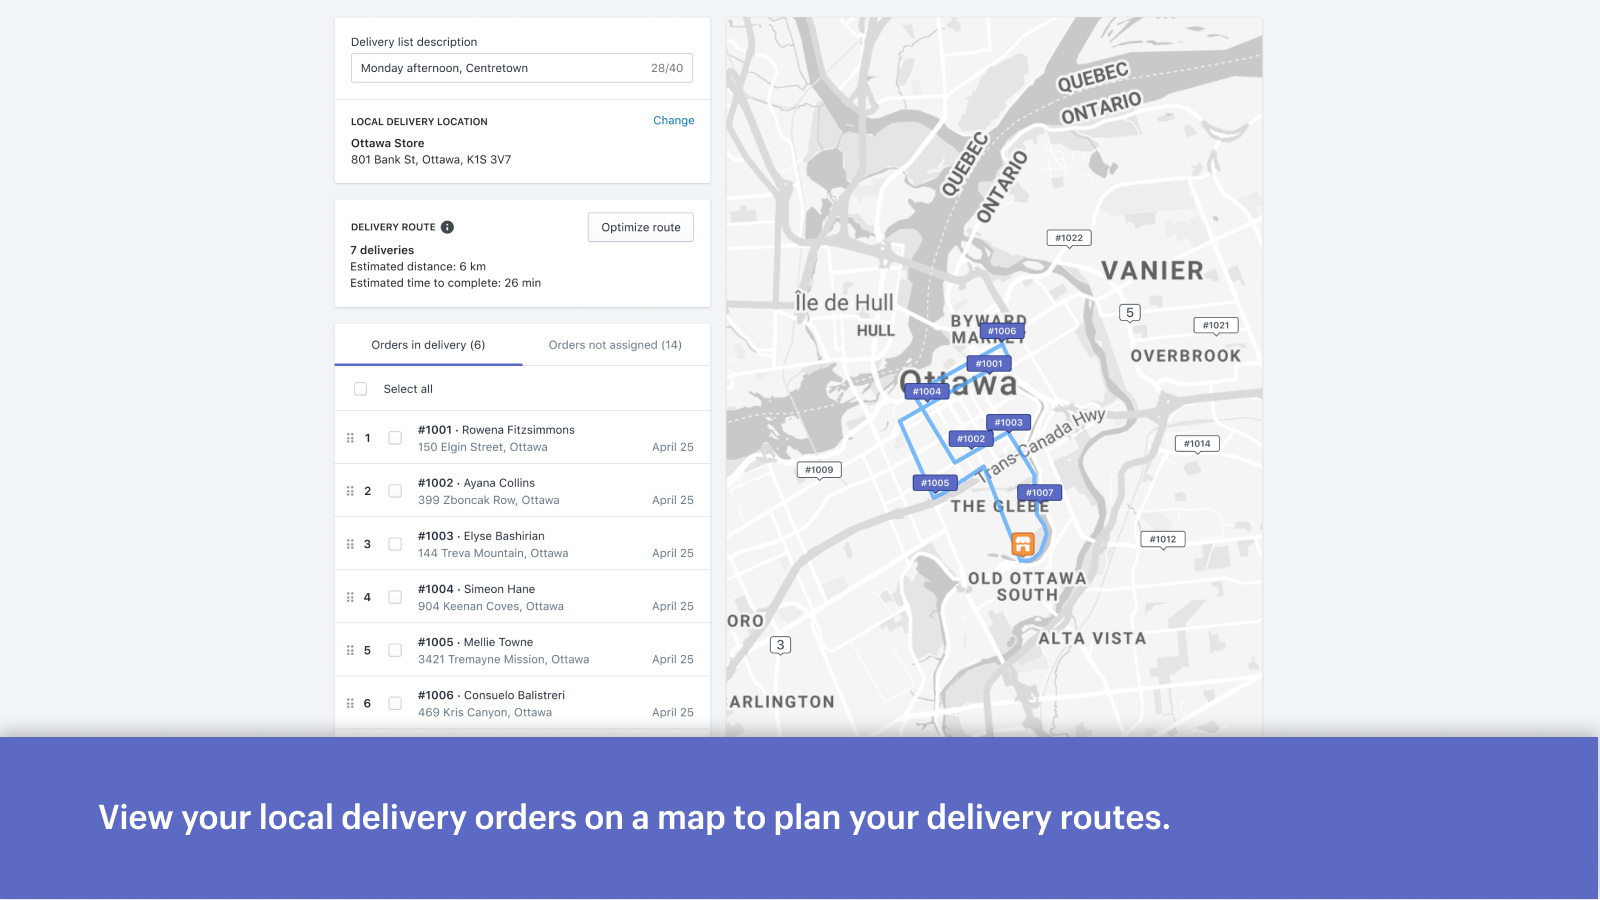 Ver tus pedidos de entrega local en un mapa para planificar tus entregas